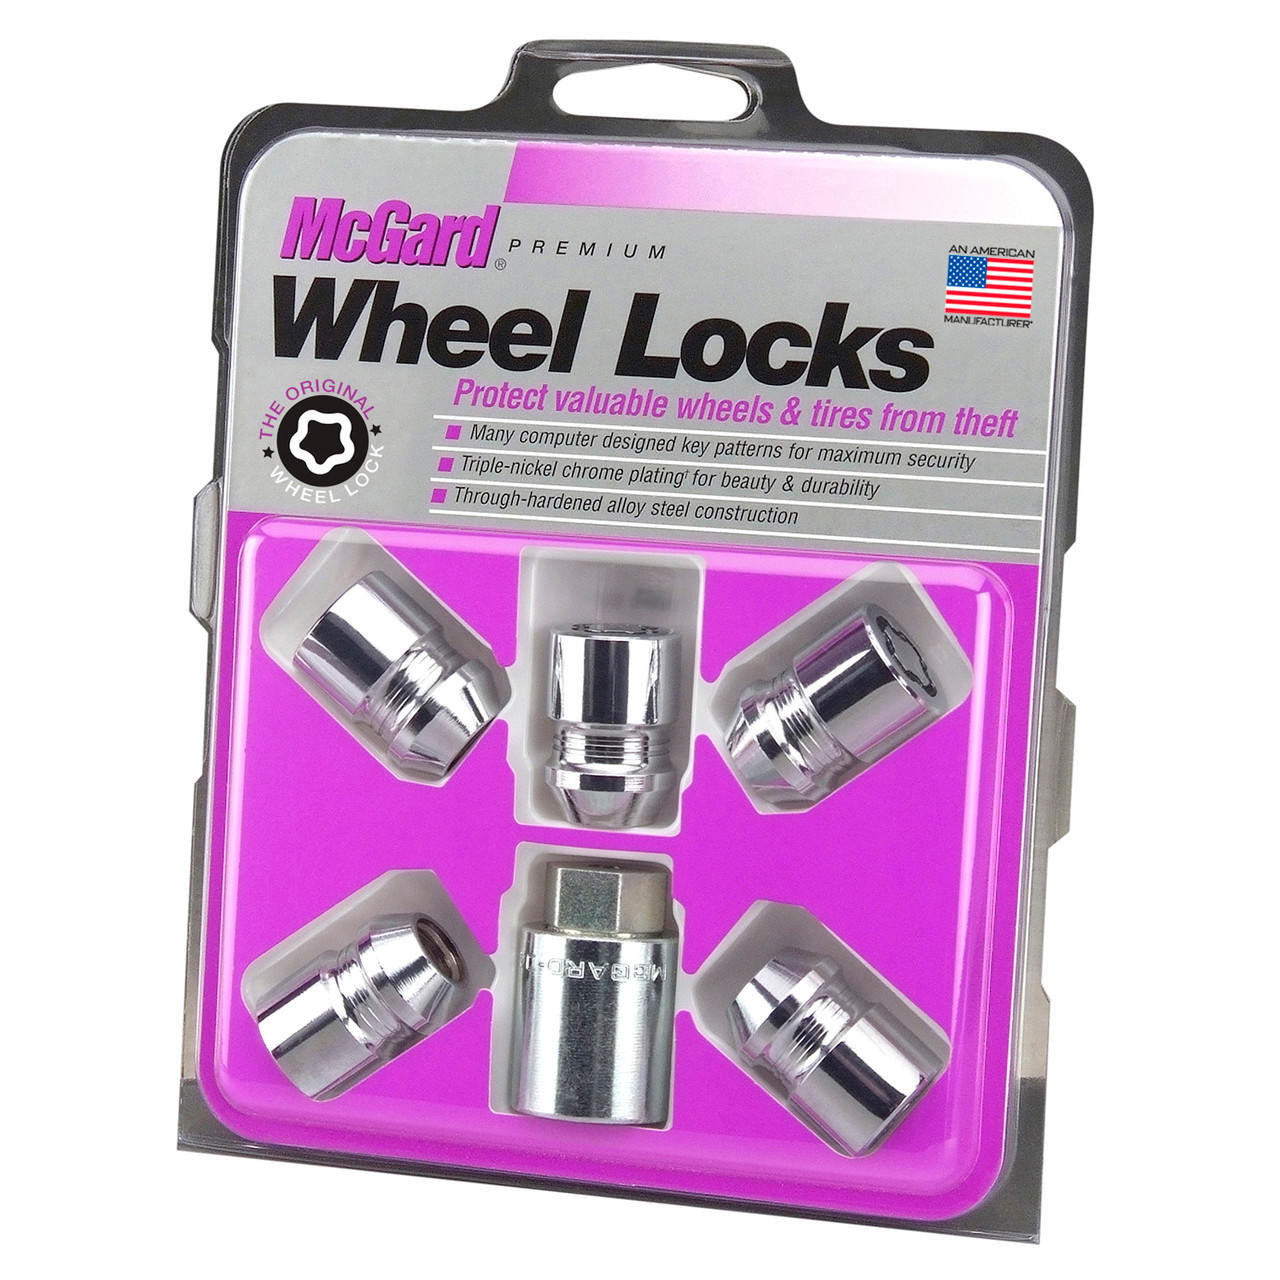 McGard Cone Seat Exposed Style Wheel Locks-Chrome-5 Lock Set 24552 